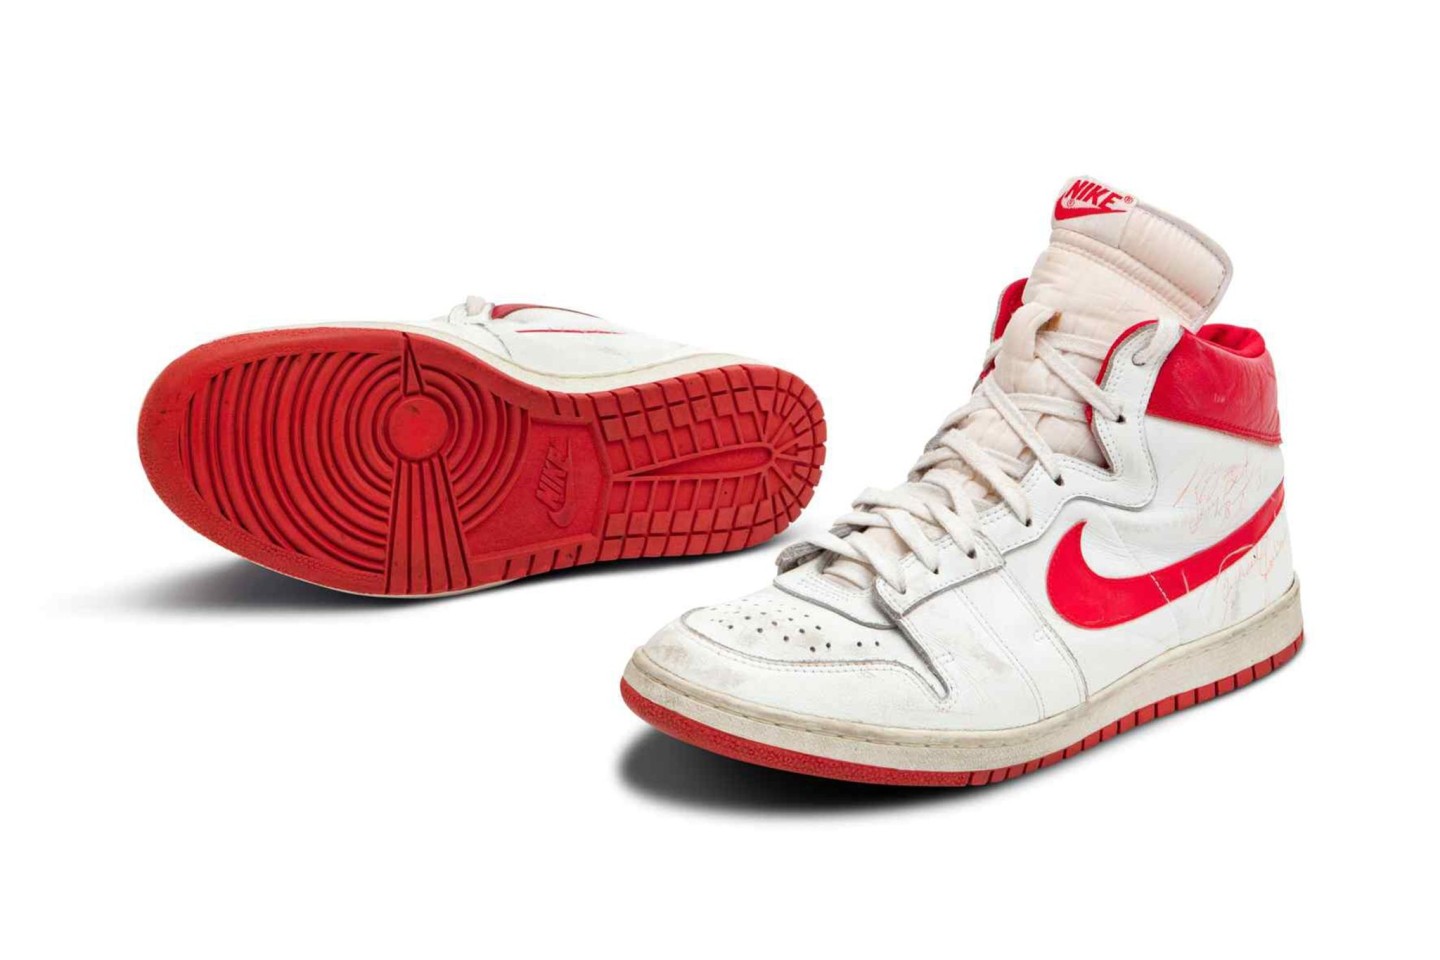 Ex-Basketballprofi Michael Jordan trug die Schuhe in seiner ersten NBA-Saison.